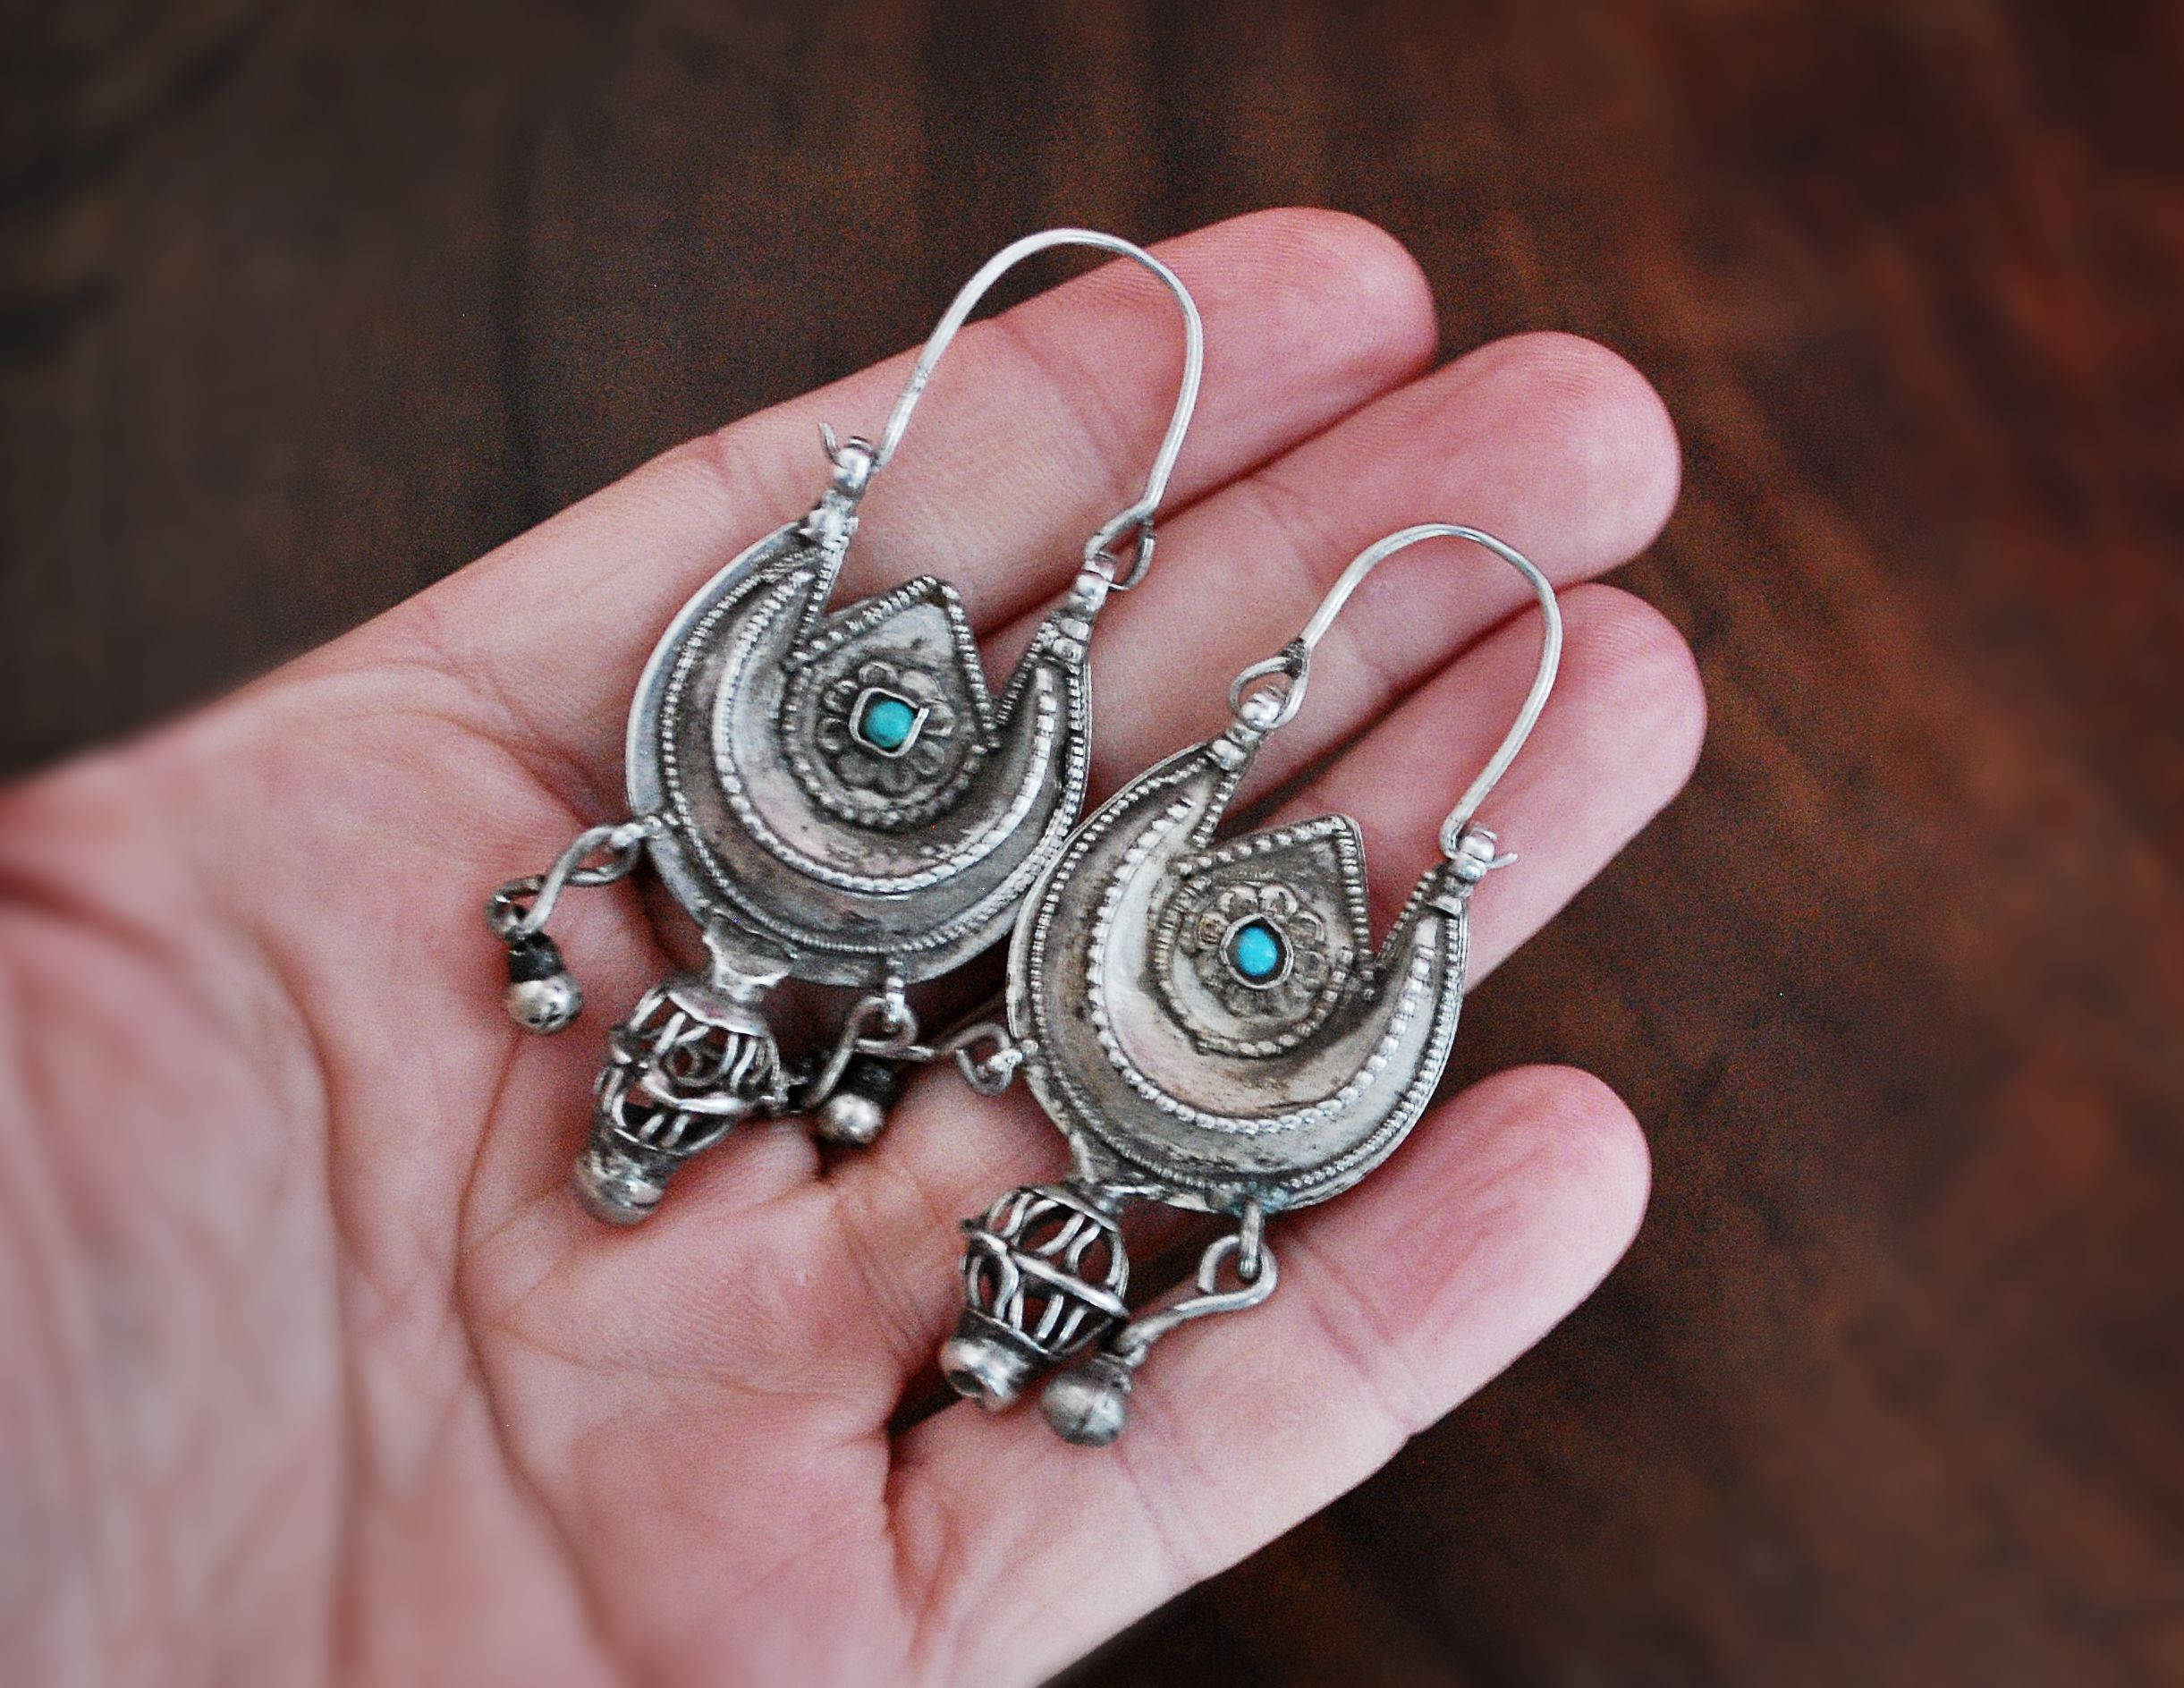 Antique Afghani Earrings with Turquoise - Crescent Moon Earrings - Ethnic Tribal Hoops - Afghani Jewelry -